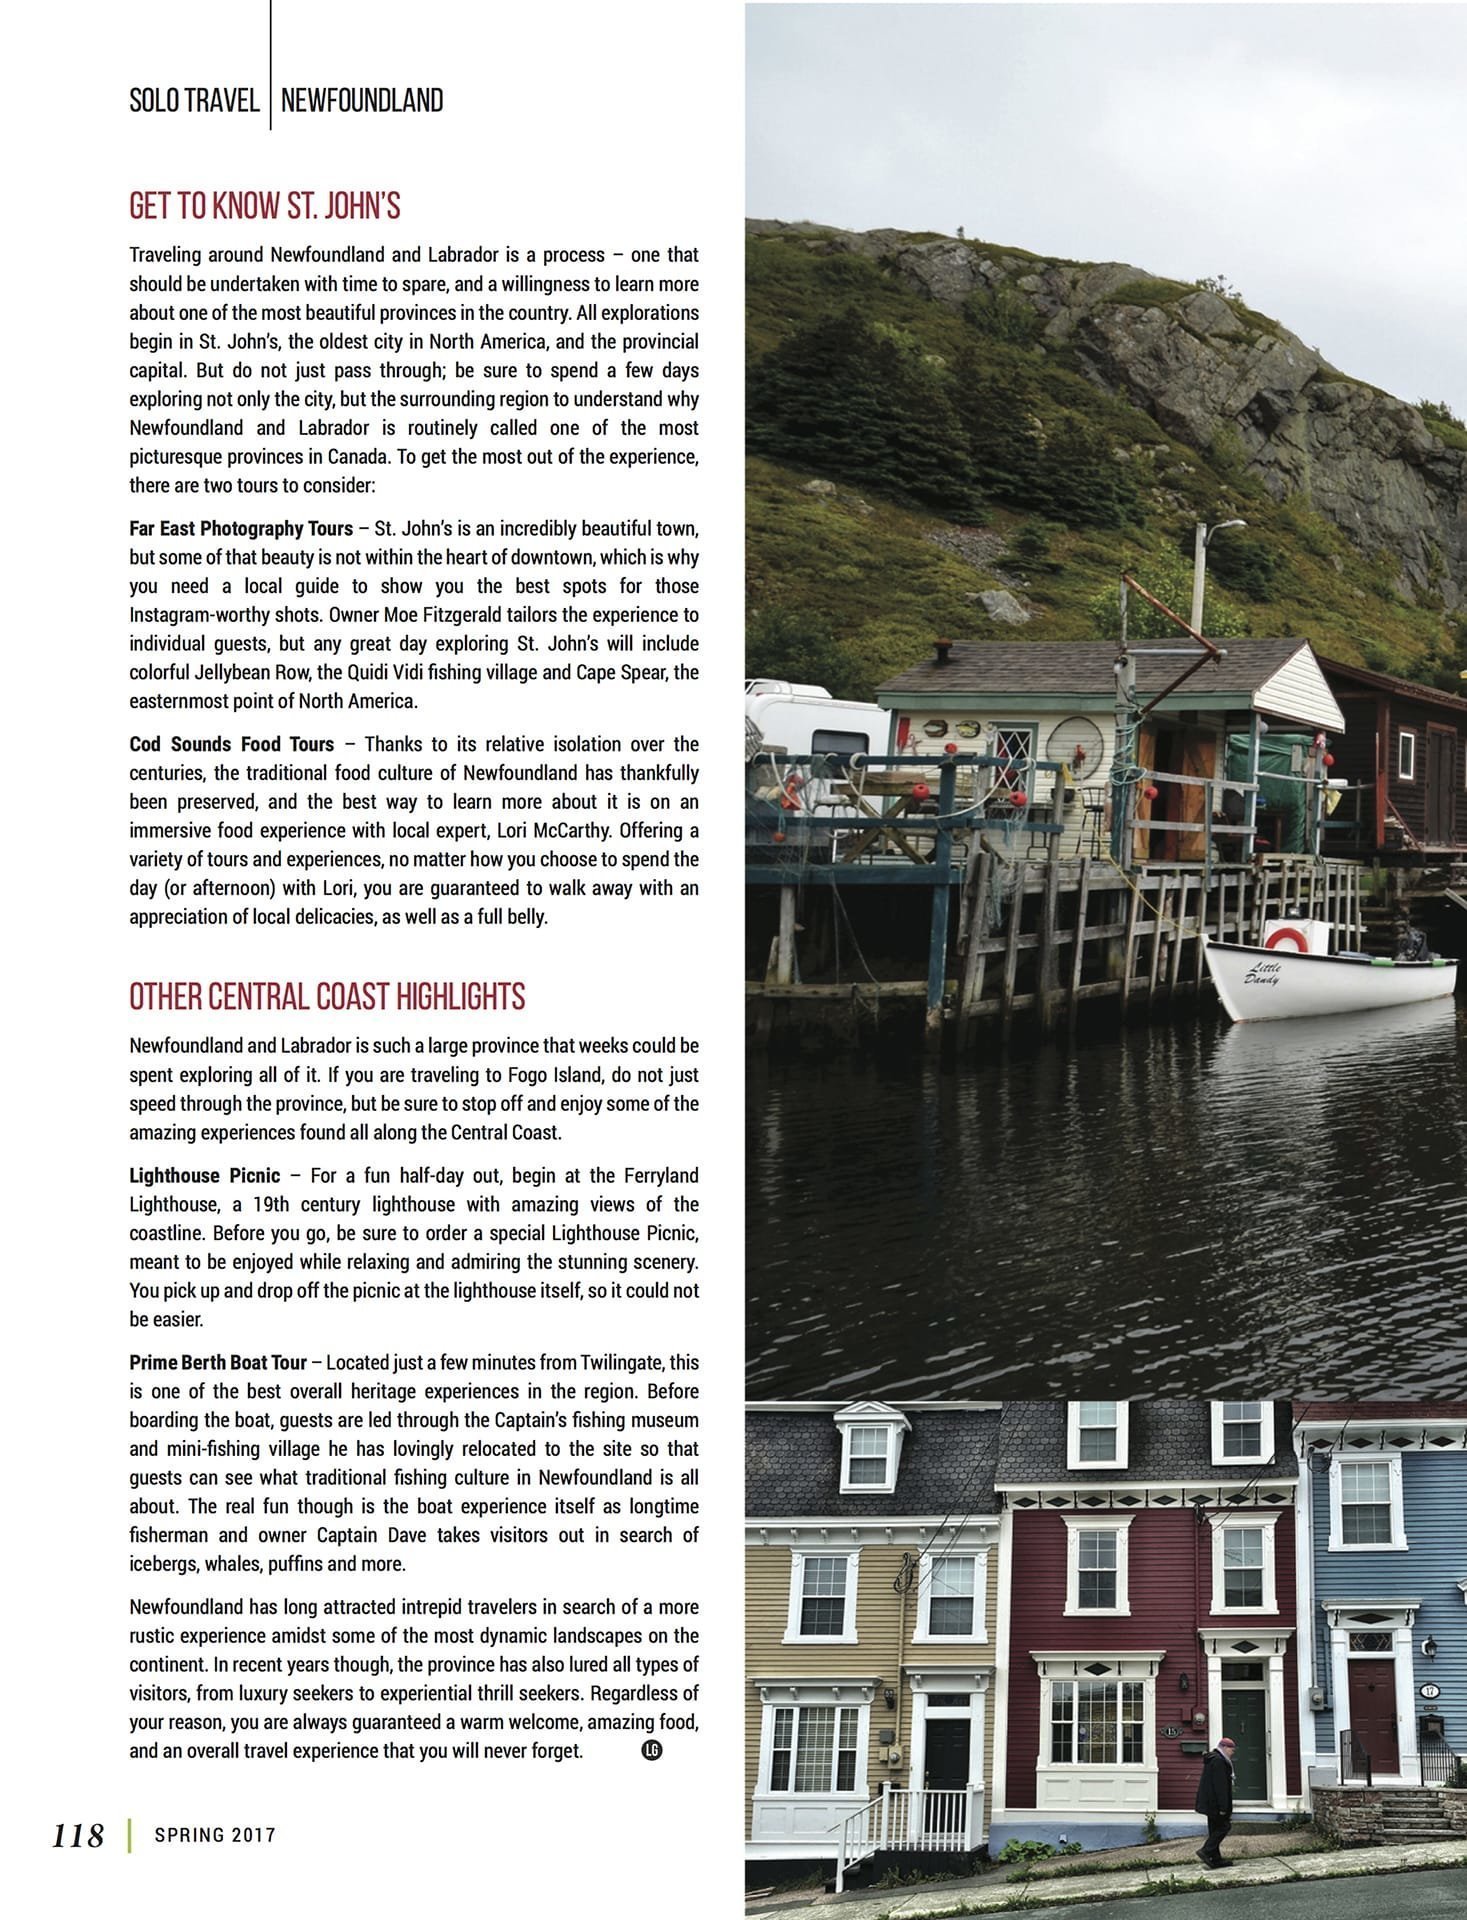 LuxeGetaways - Luxury Travel - Luxury Travel Magazine - Newfoundland - Matt Long - Canada